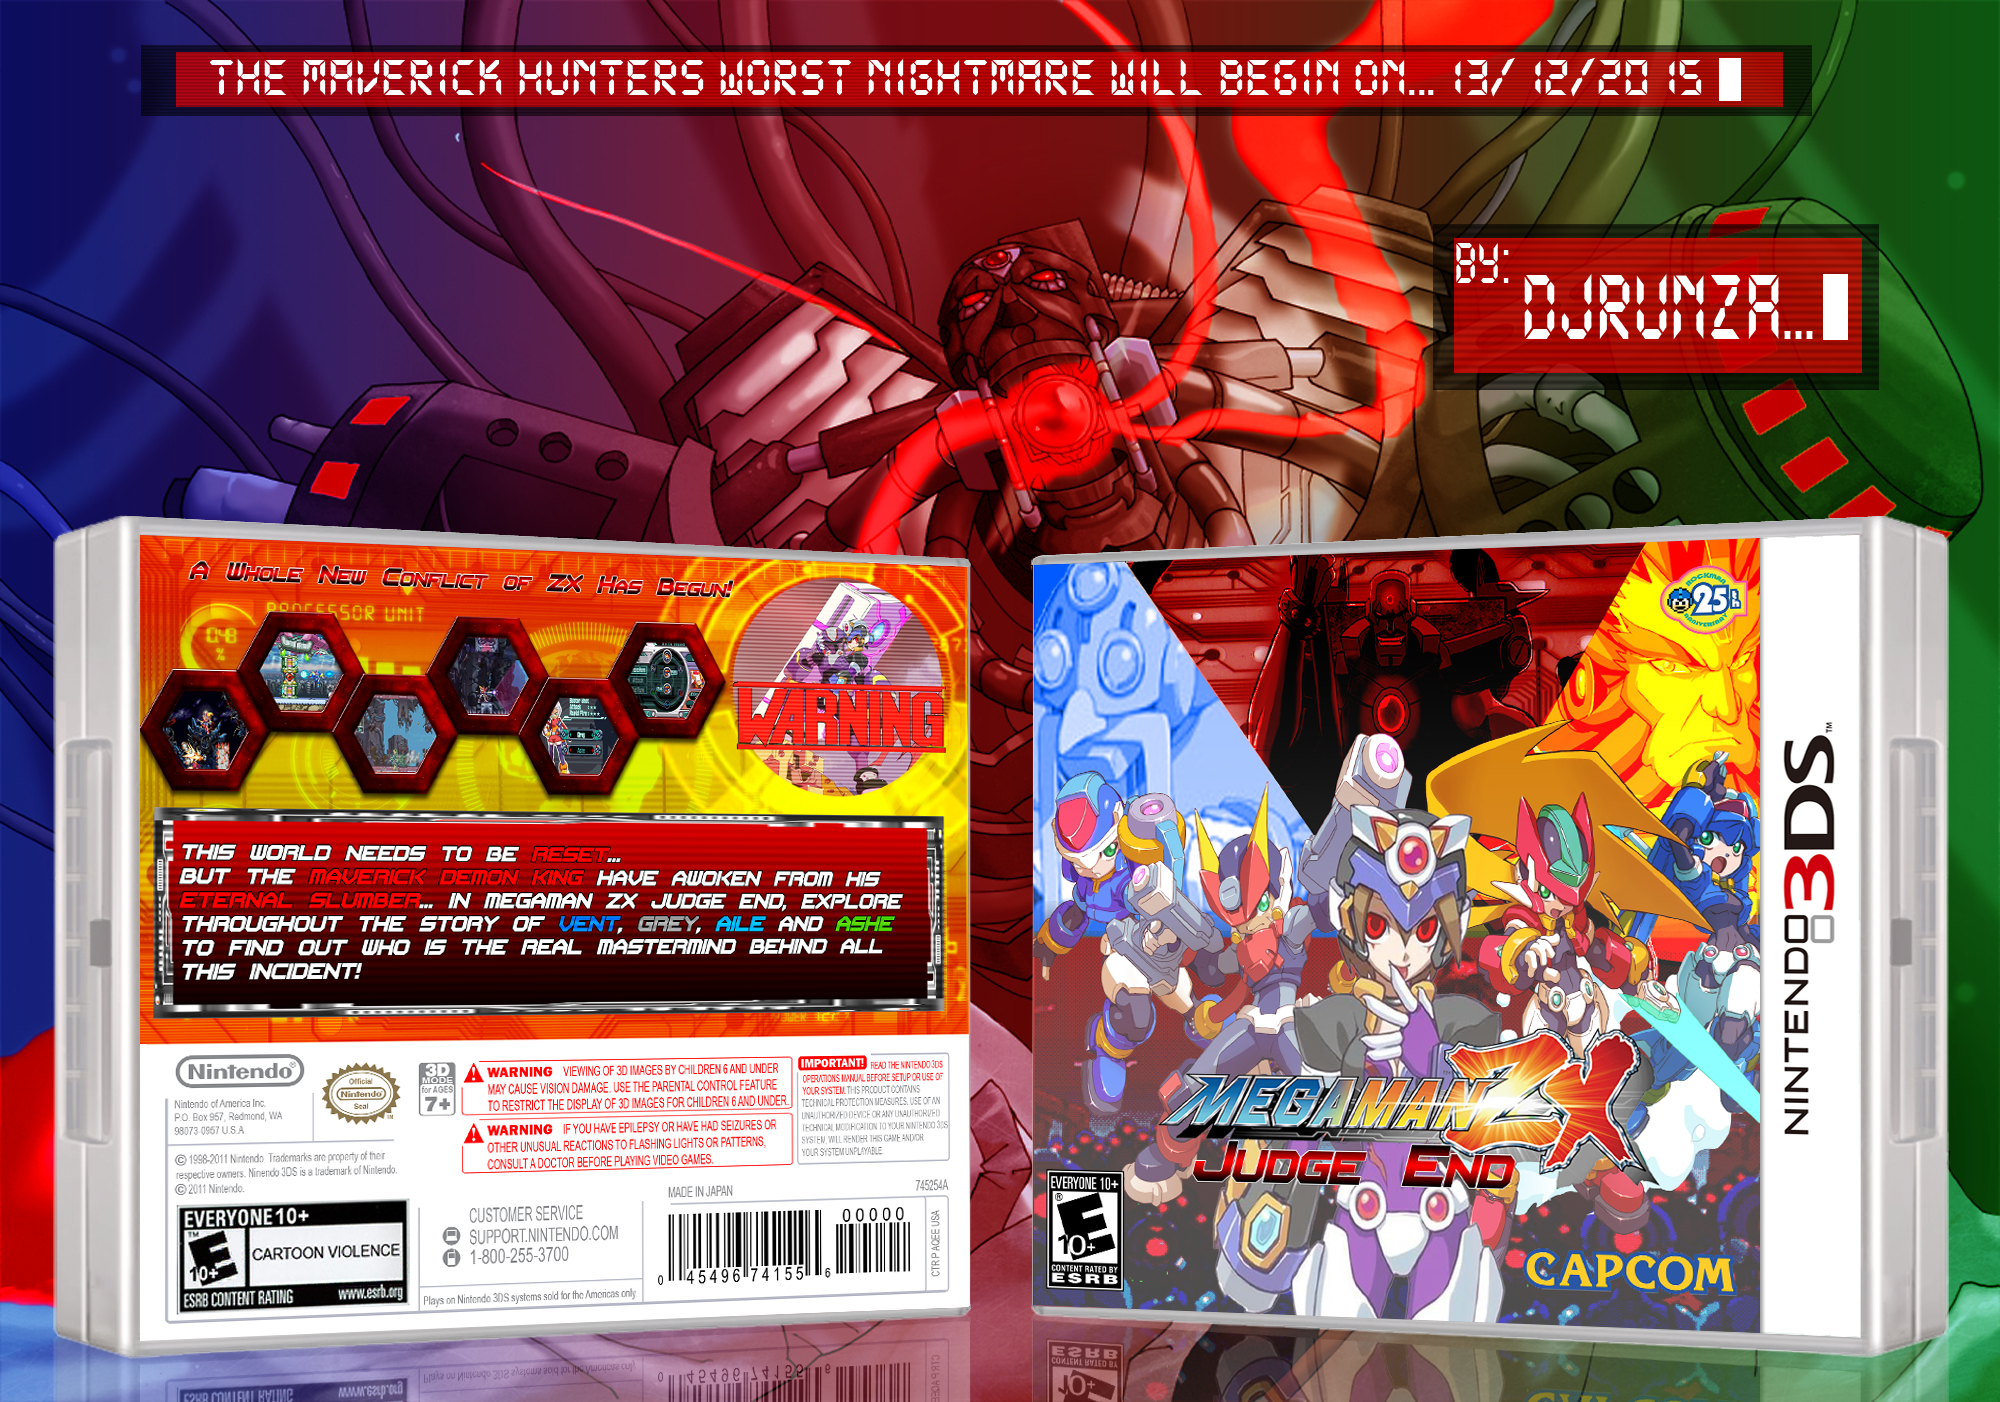 Megaman ZX Judge End box cover